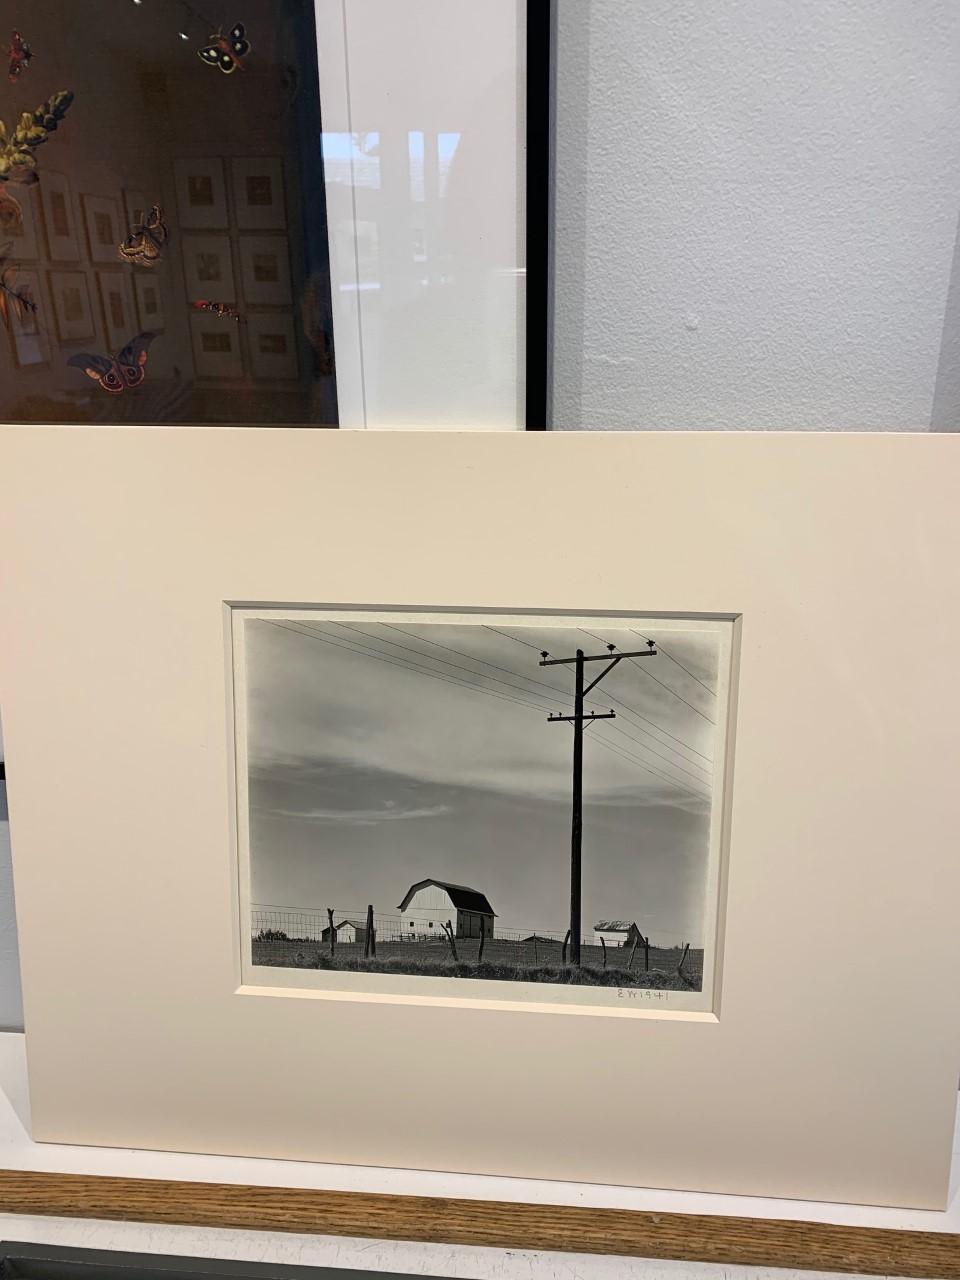 Edward Weston Black and White Photograph - Untitled, Barn and Telephone Poles